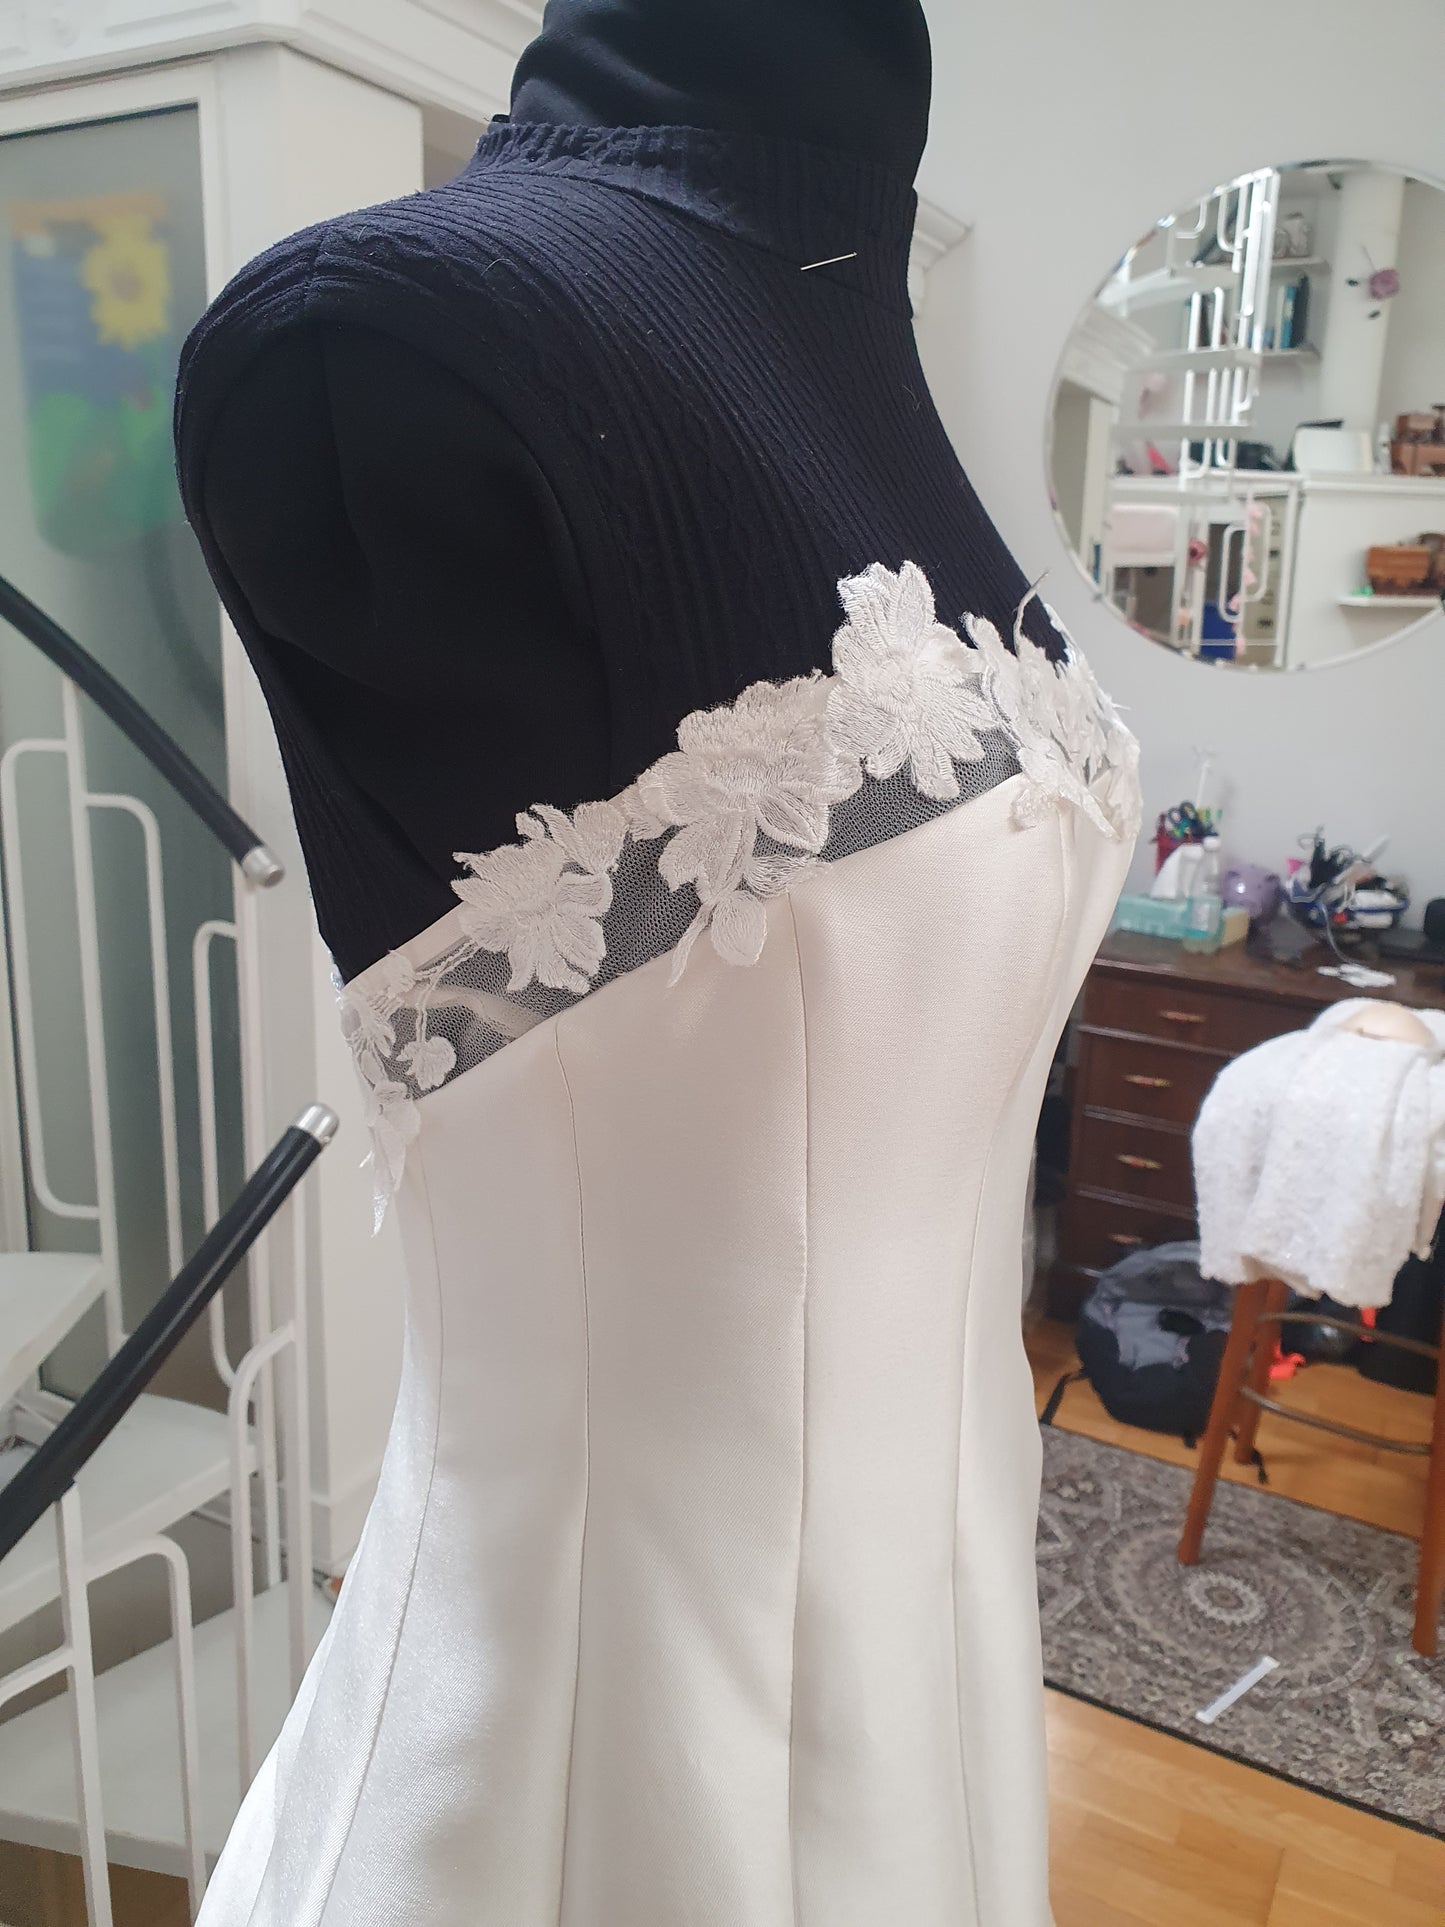 Dress 5773: EcoChic Bridal/Private Designer "Monica" waist 27